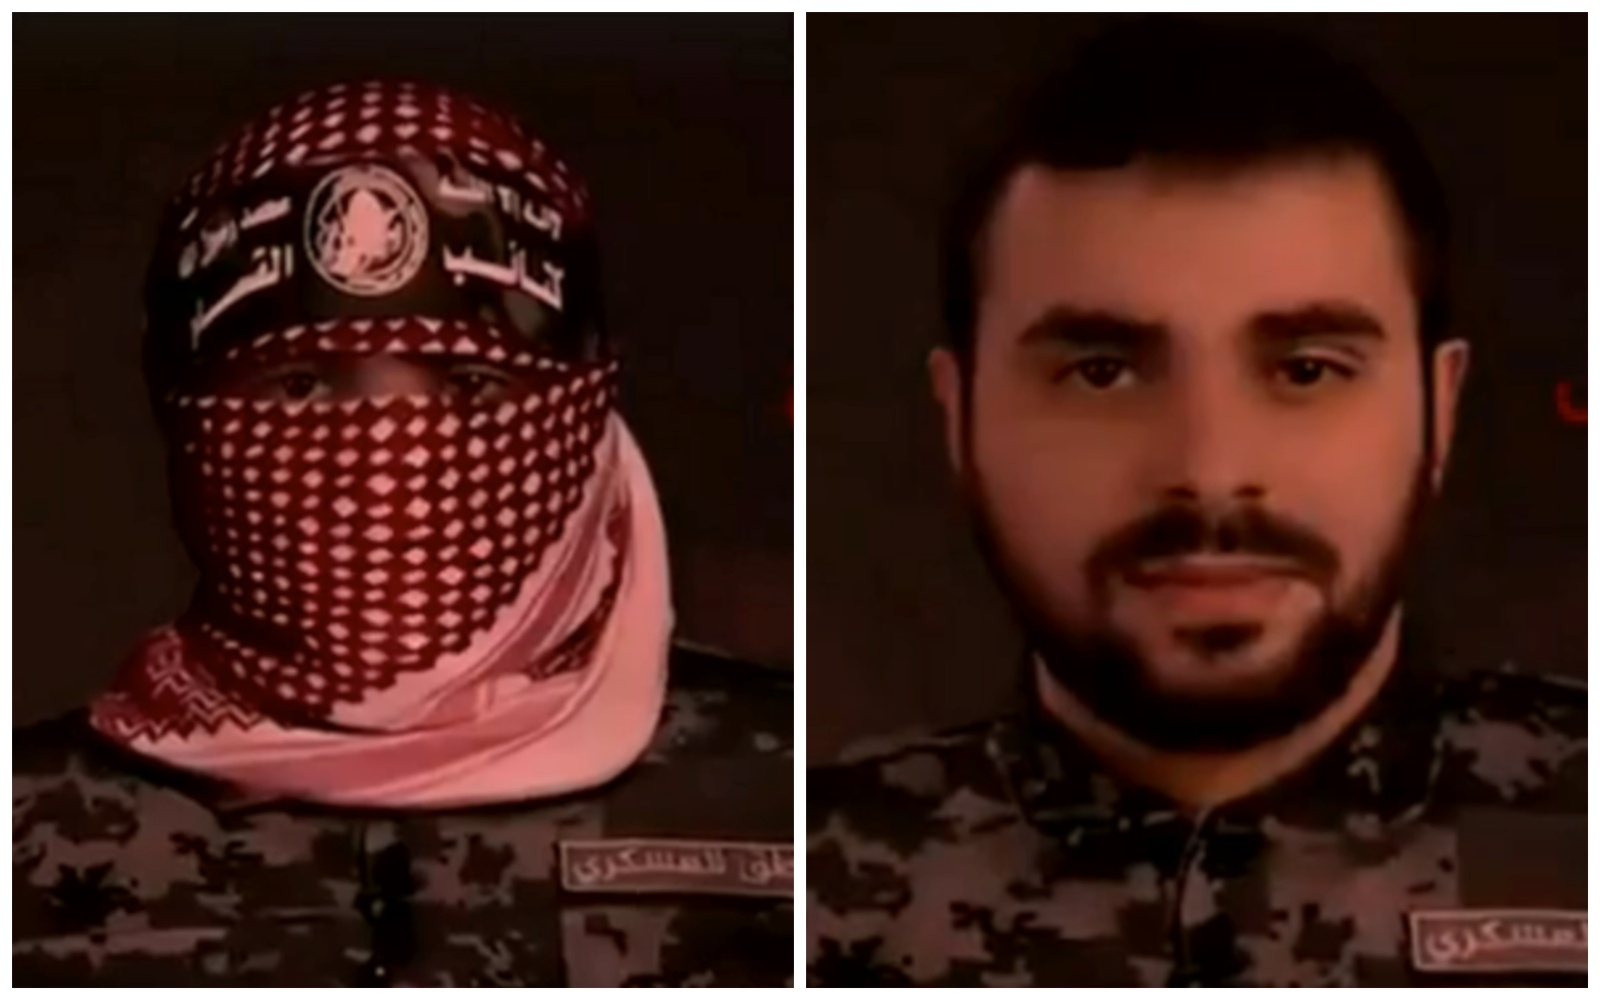 IDF claims to reveal identity of Hamas's military spokesman Abu